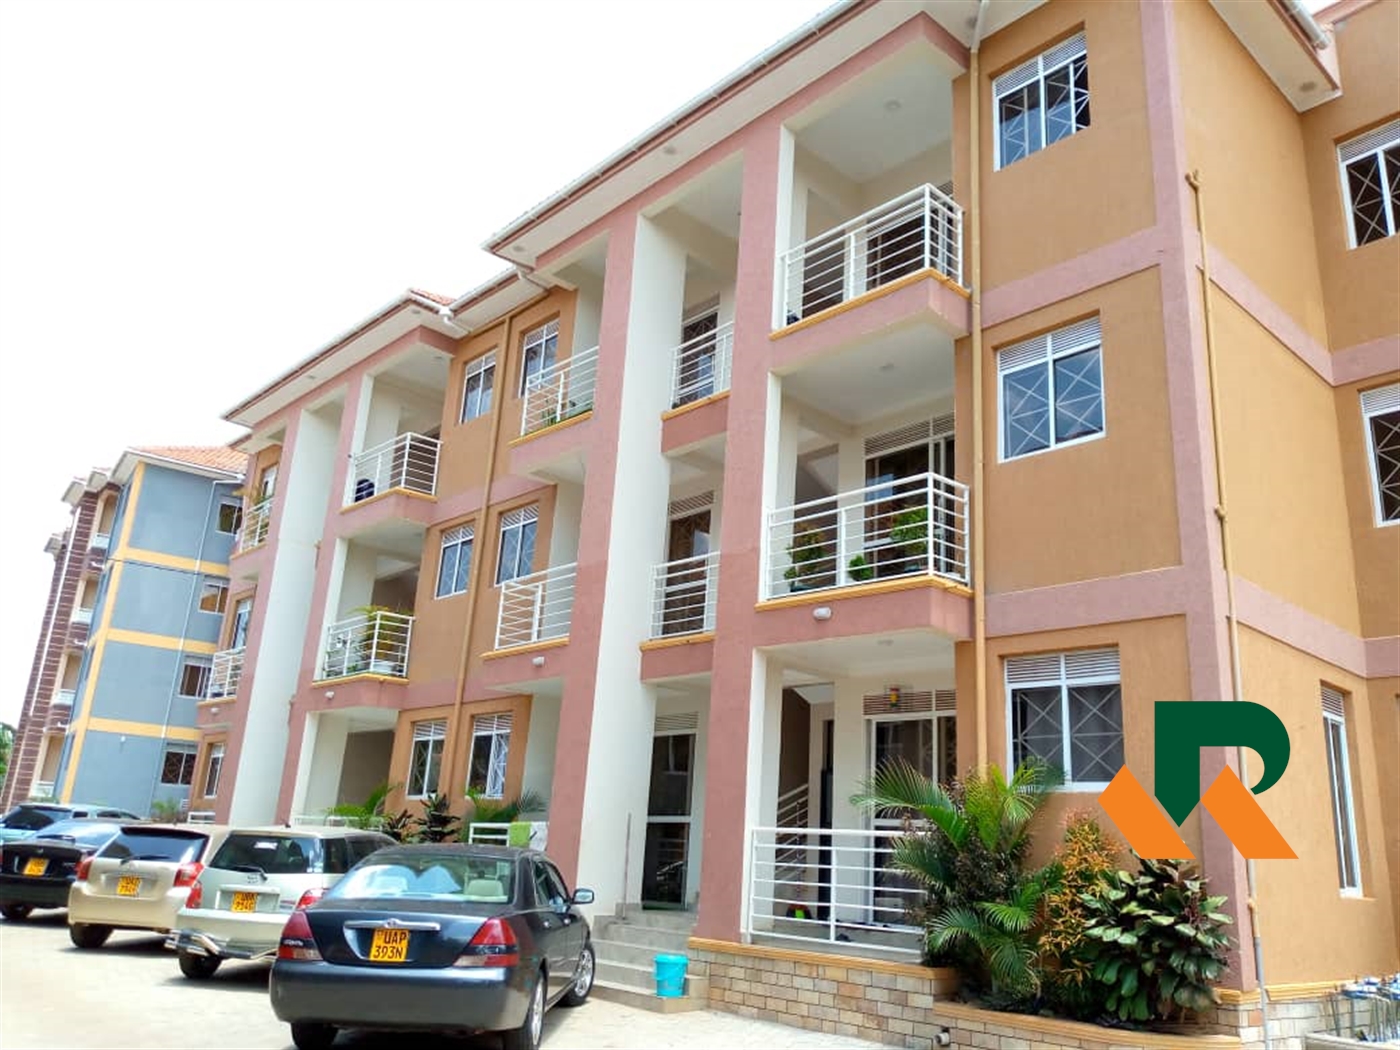 Apartment block for sale in Kireka Kampala